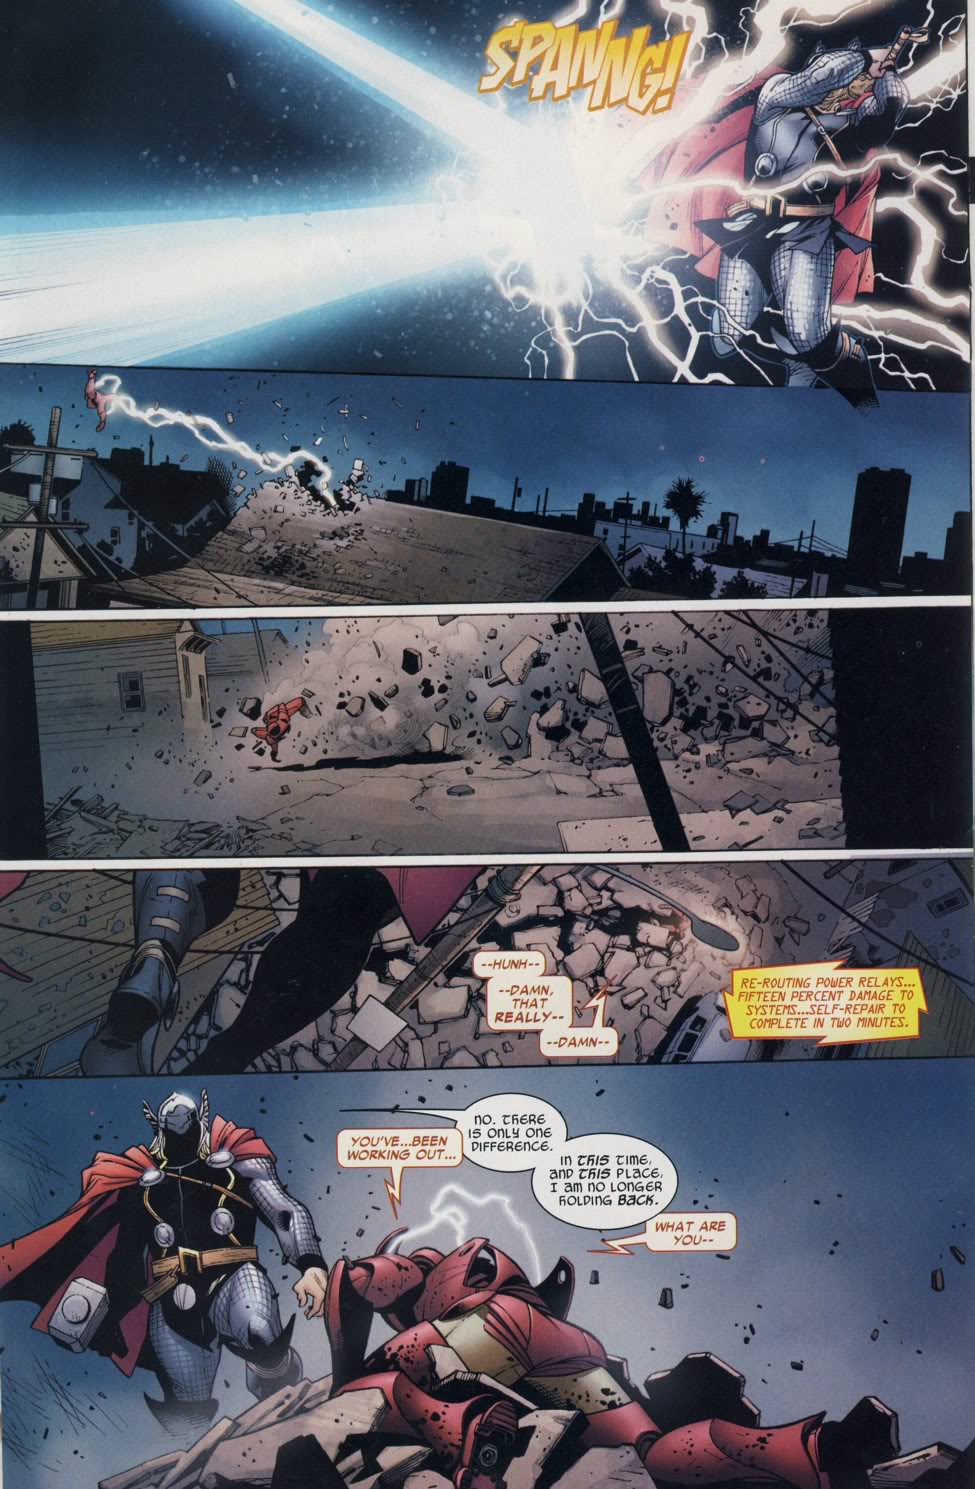 Truncheon the Camerlengo: Thor vs Iron Man (post-Civil War)